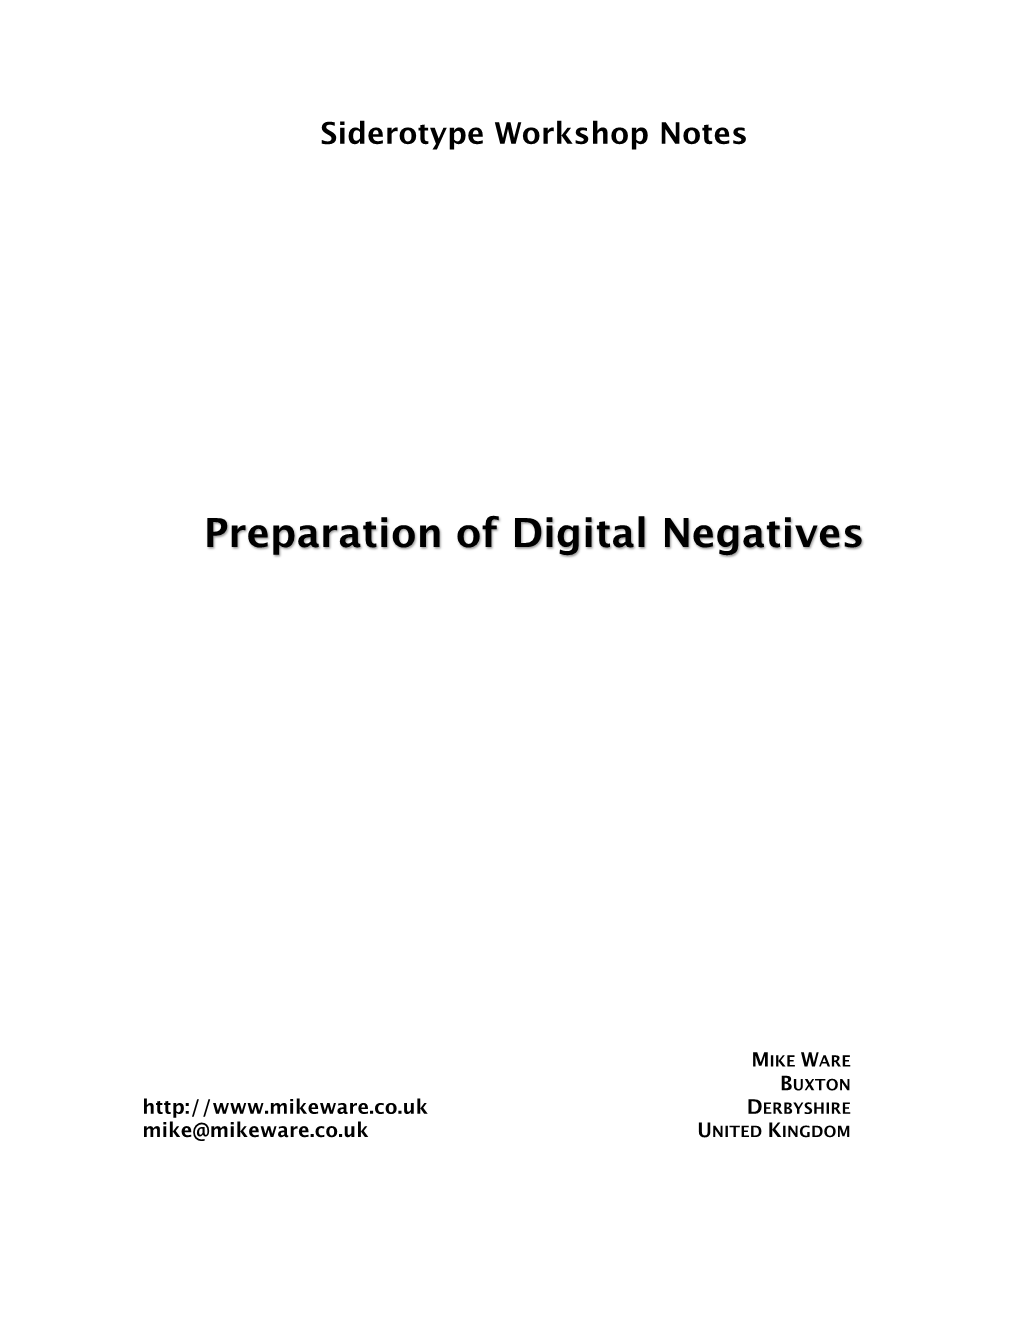 Preparation of Digital Negatives